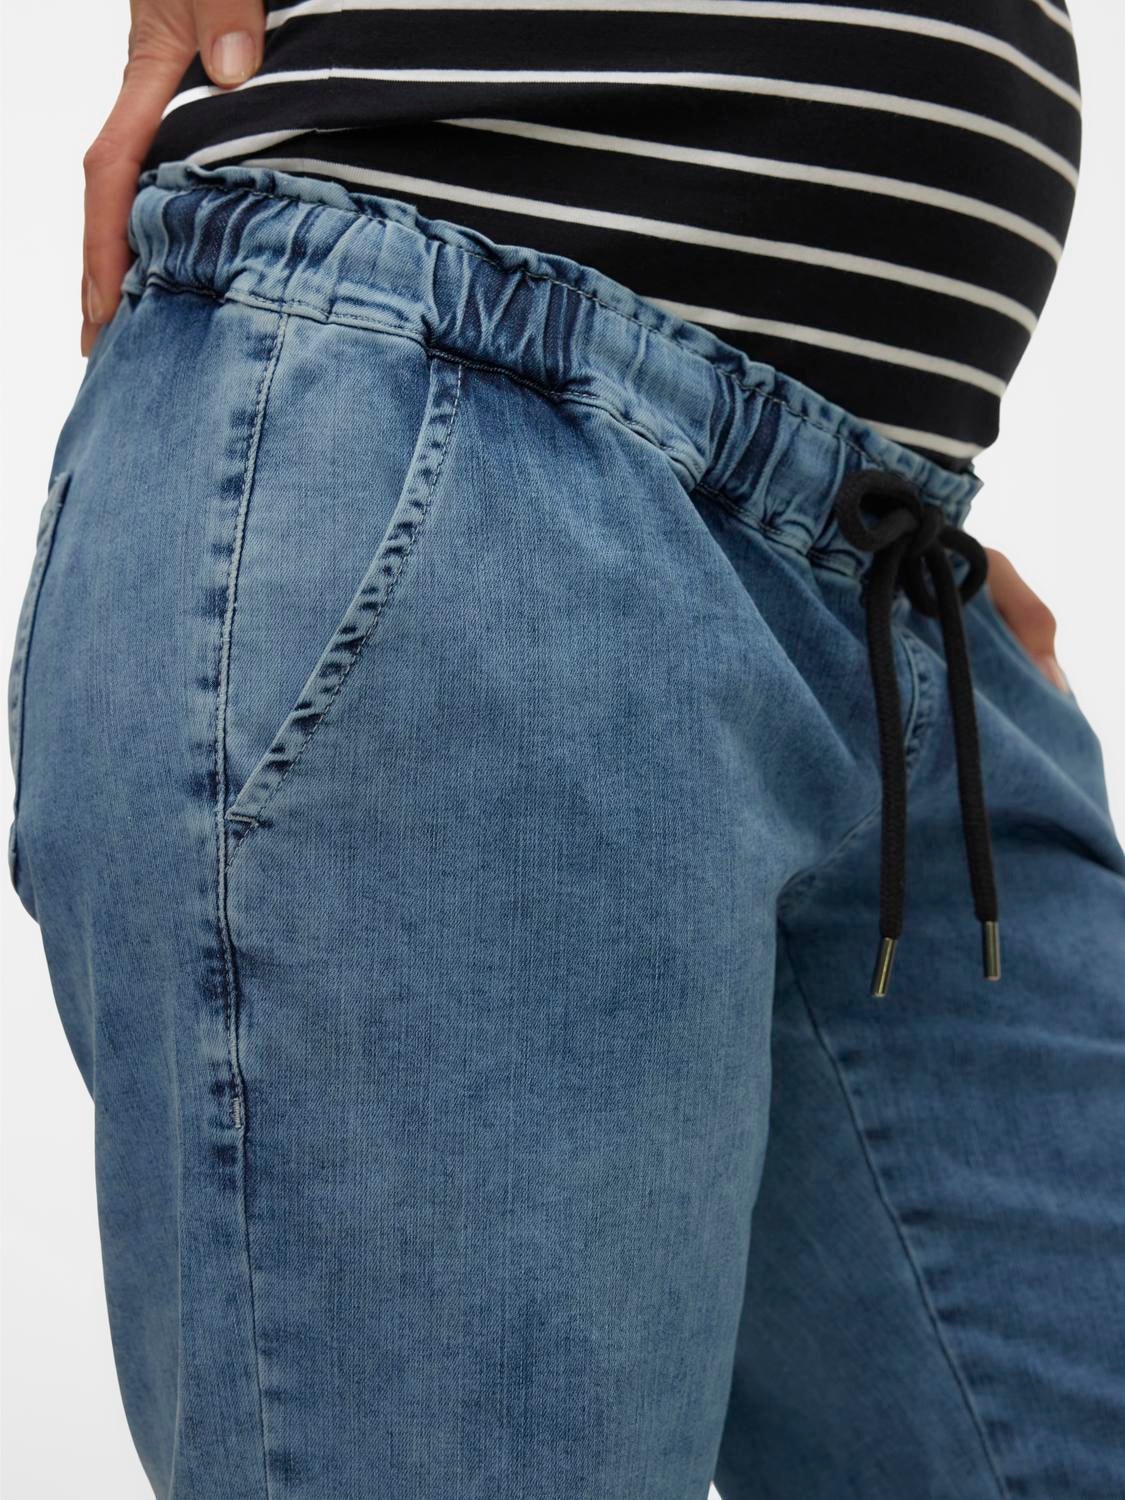 MAMA.LICIOUS Luźno dopasowane Niska talia Jeans -Medium Blue Denim - 20018889